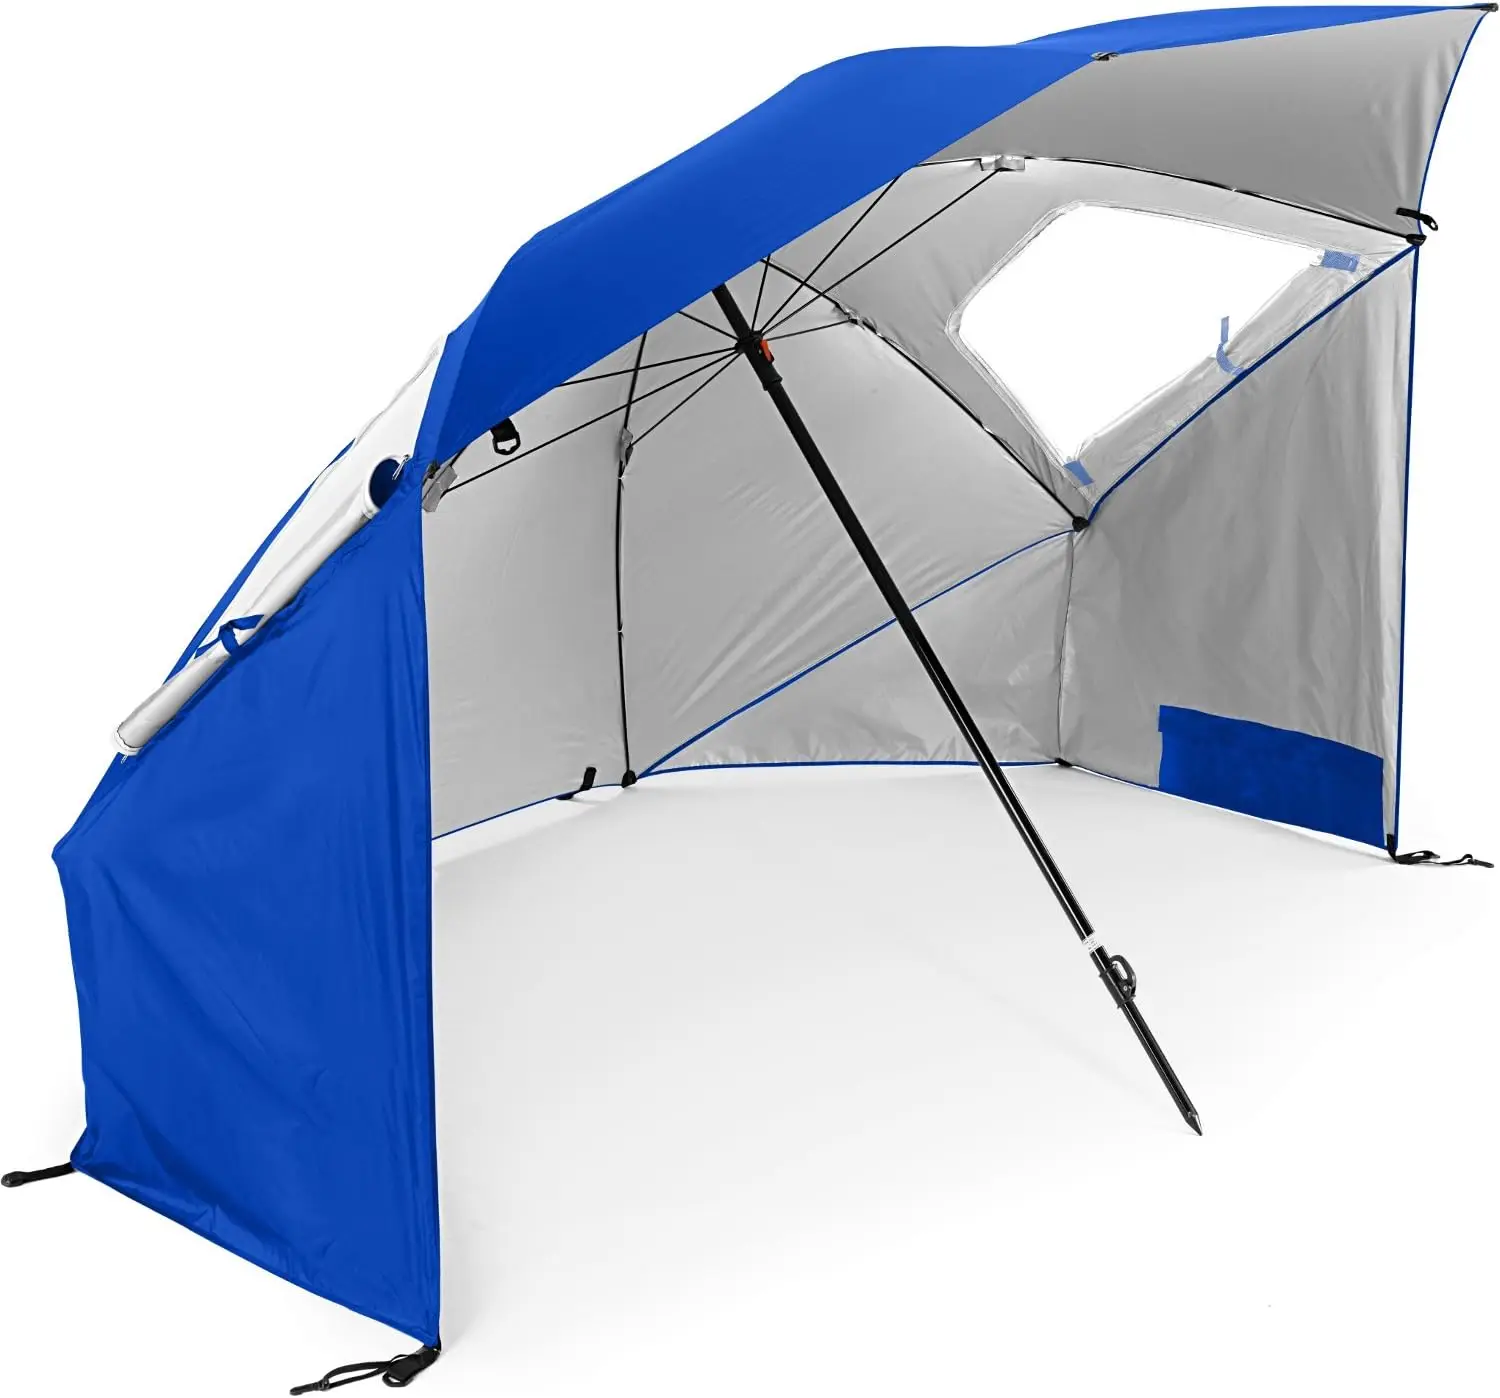 

Super- SPF 50 + зонт от солнца и дождя для кемпинга, пляжа и спортивных мероприятий (8 футов, синий)